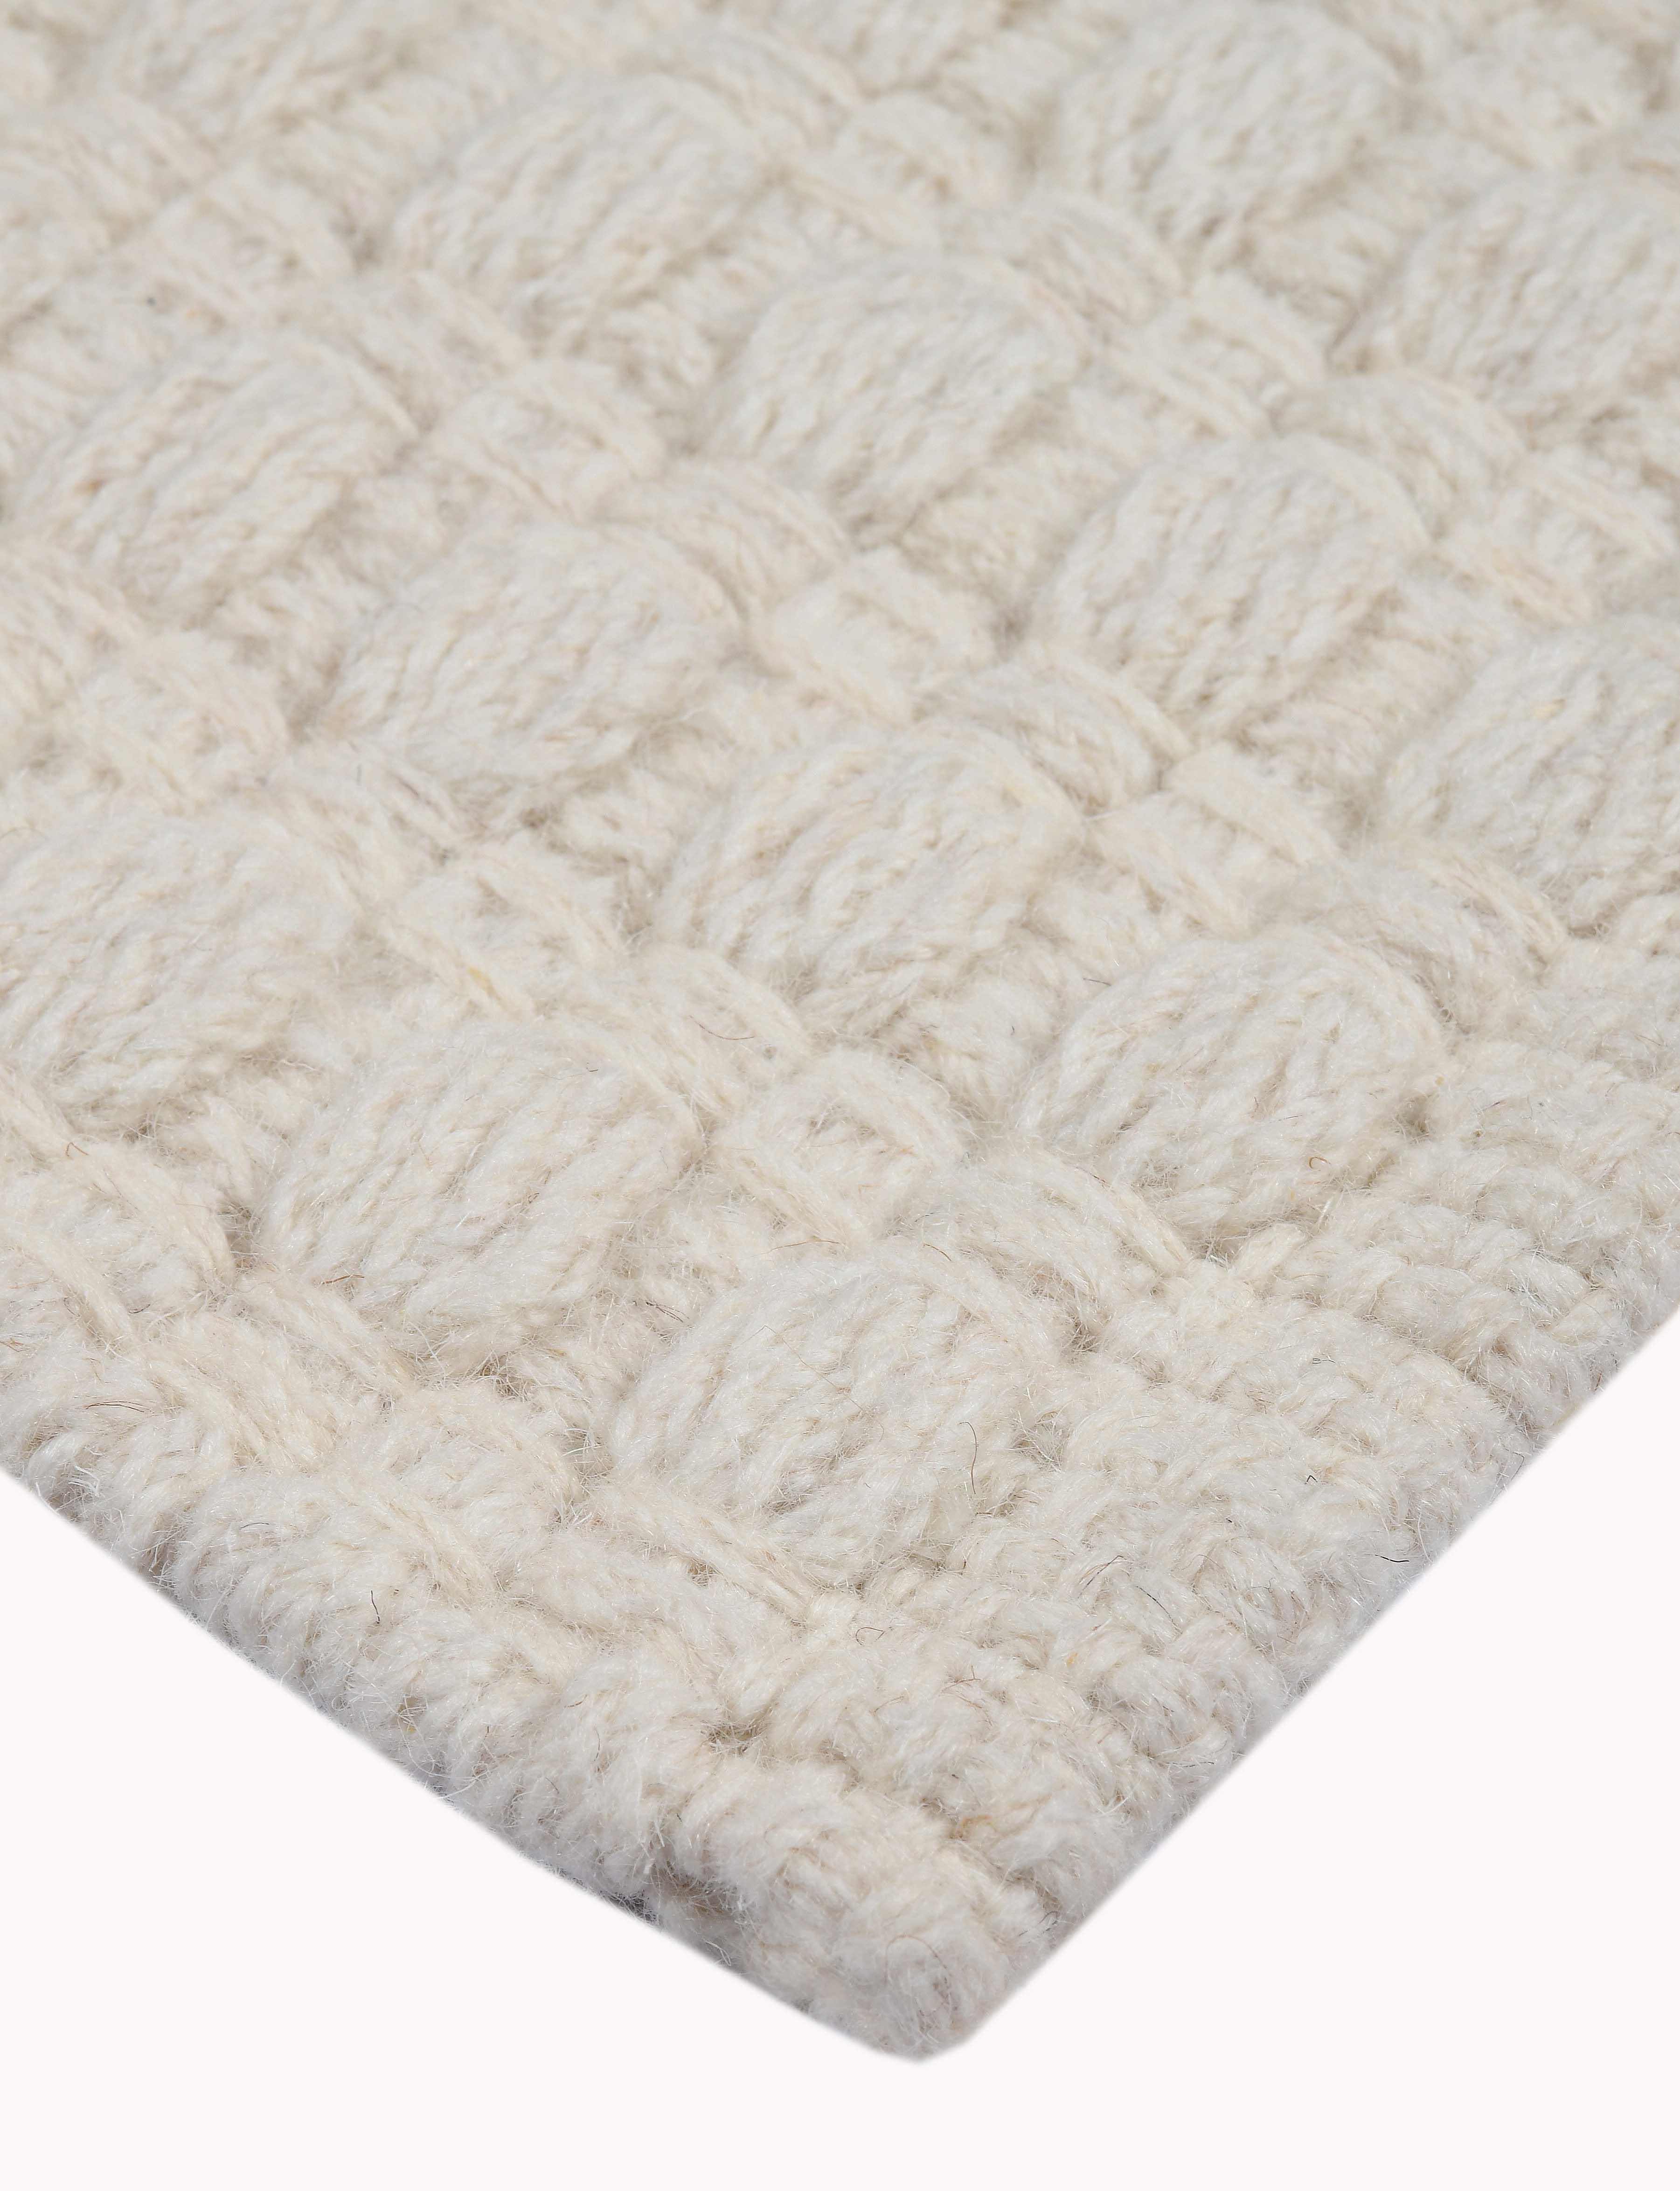 Hand-Woven Una, Ecru, Handwoven Face 60% Undyed NZ Wool, 40% Undyed MED Wool, 8' x 10' For Sale